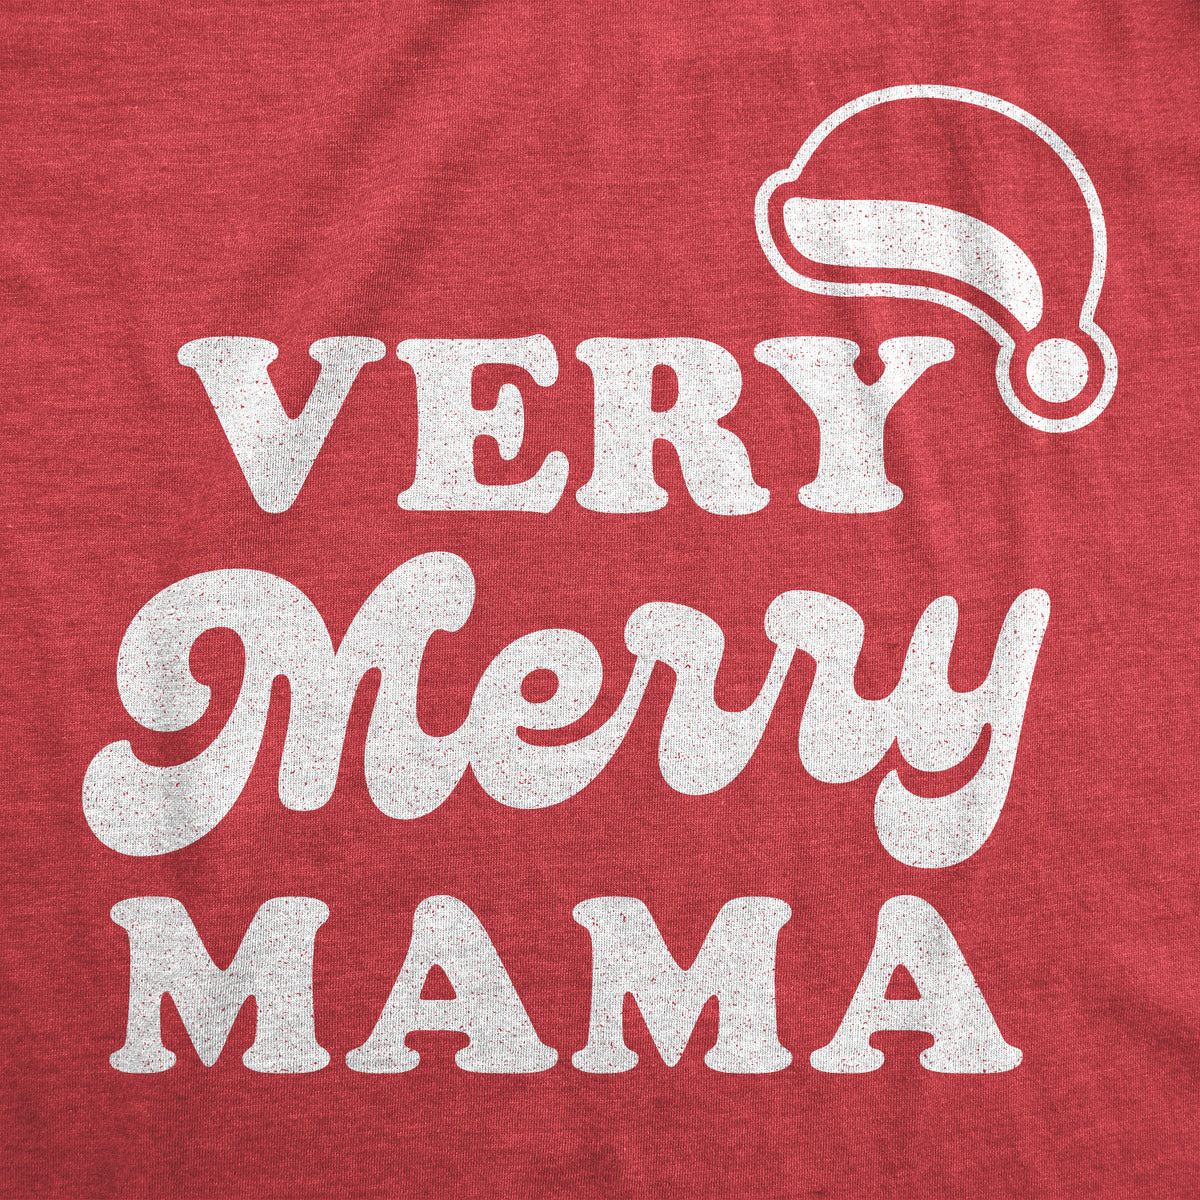 Very Merry Mama Maternity T Shirt